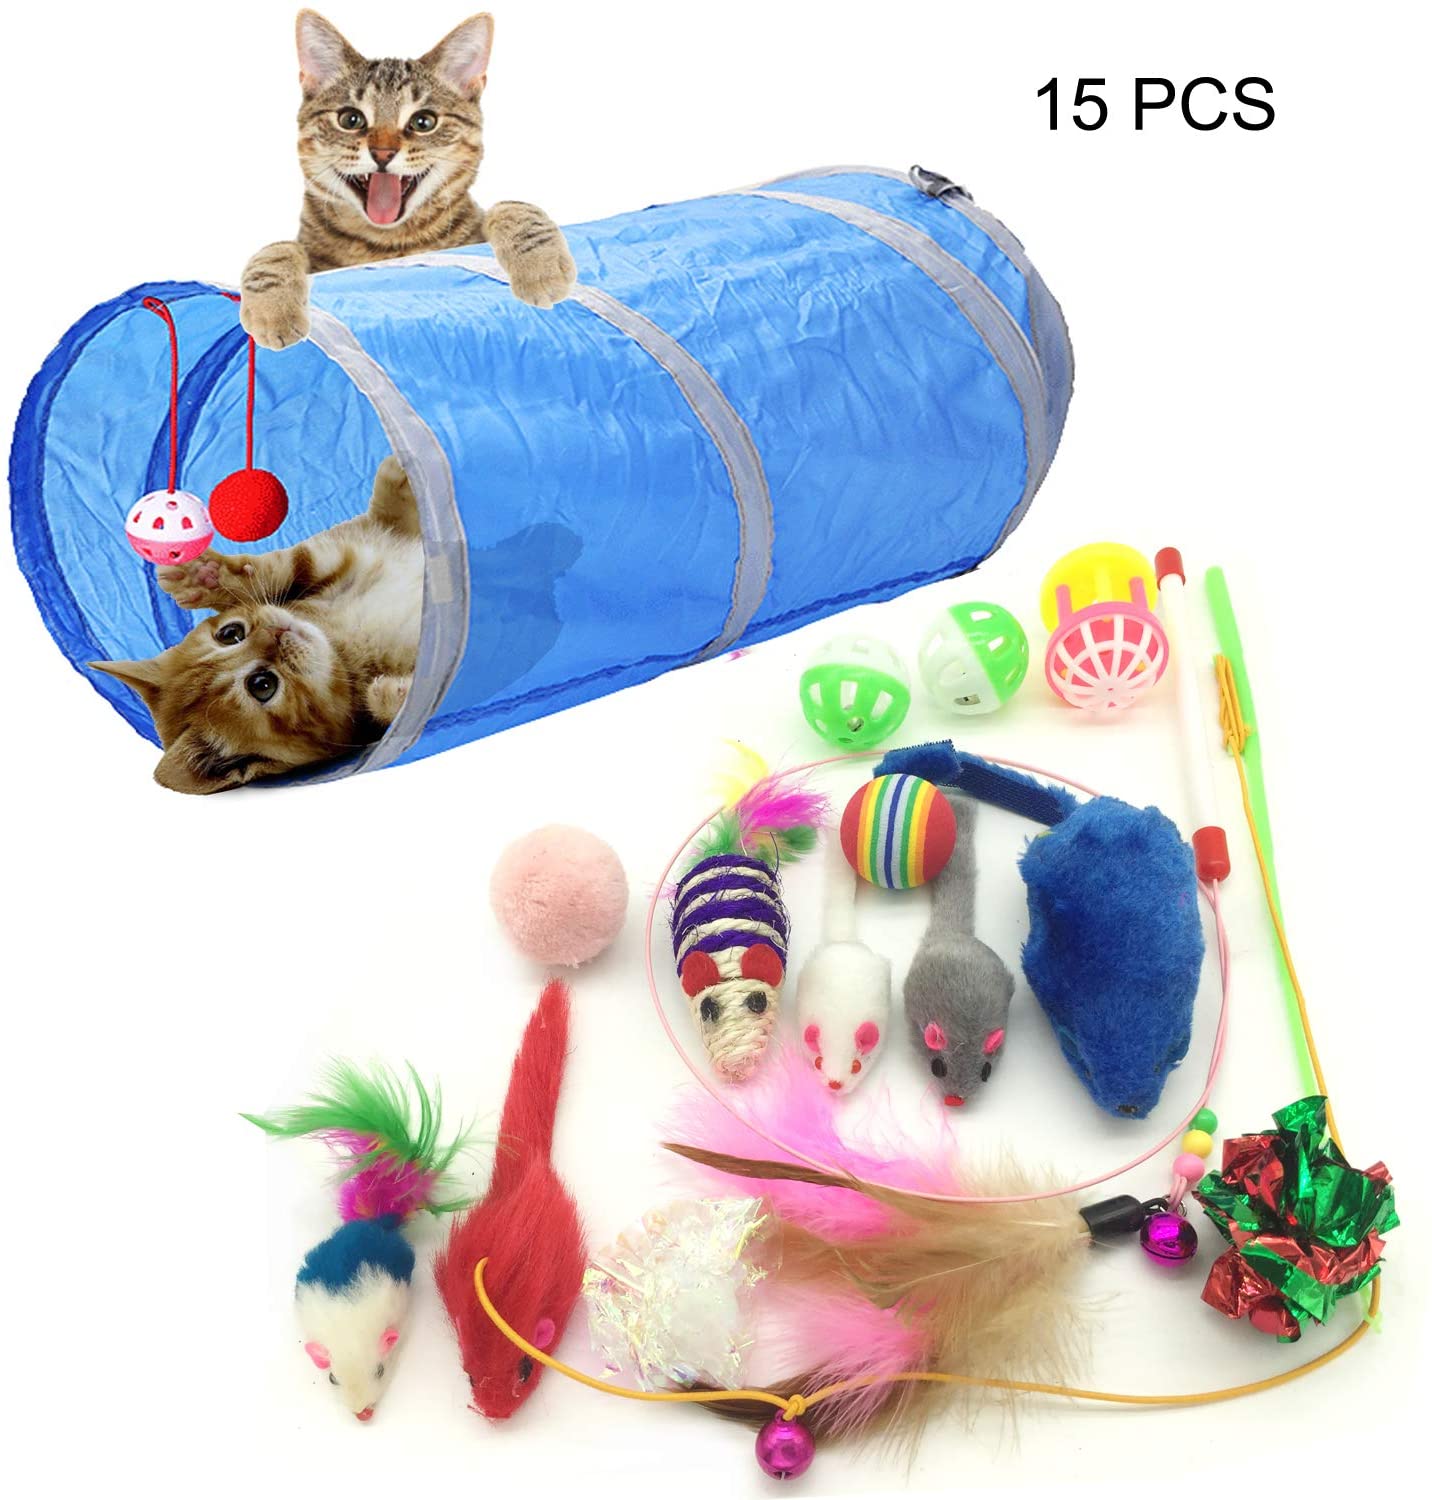  PietyPet Juguetes para Gatos, 15 Piezas Juguetes Gatos, Juguete Interactivo para Gatos Kitty 